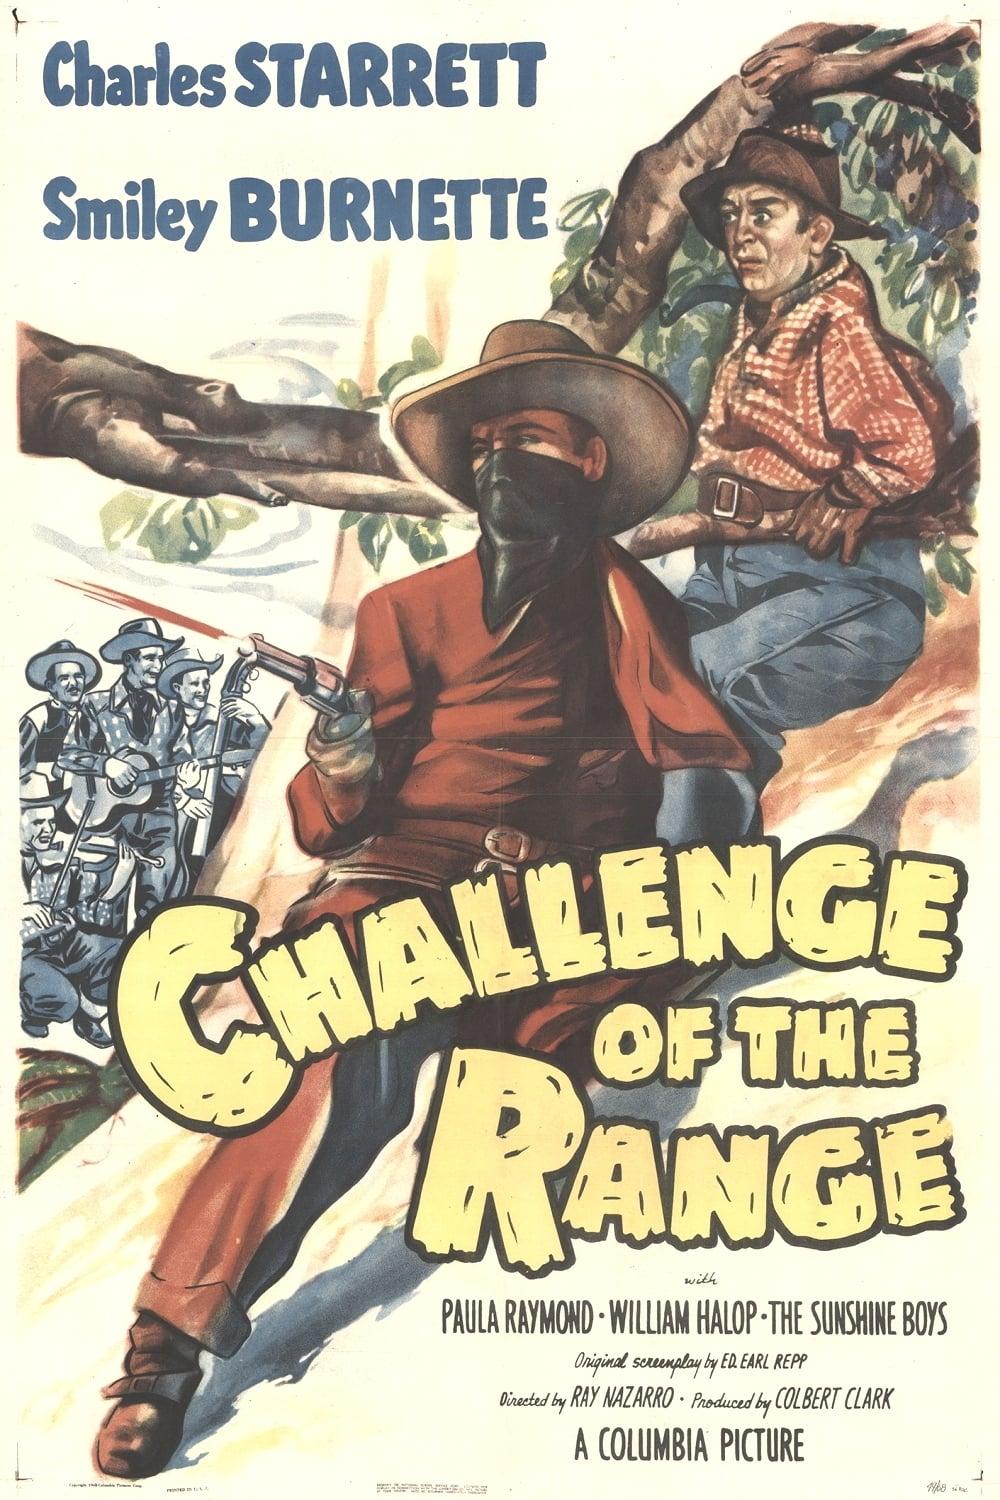 Challenge of the Range poster